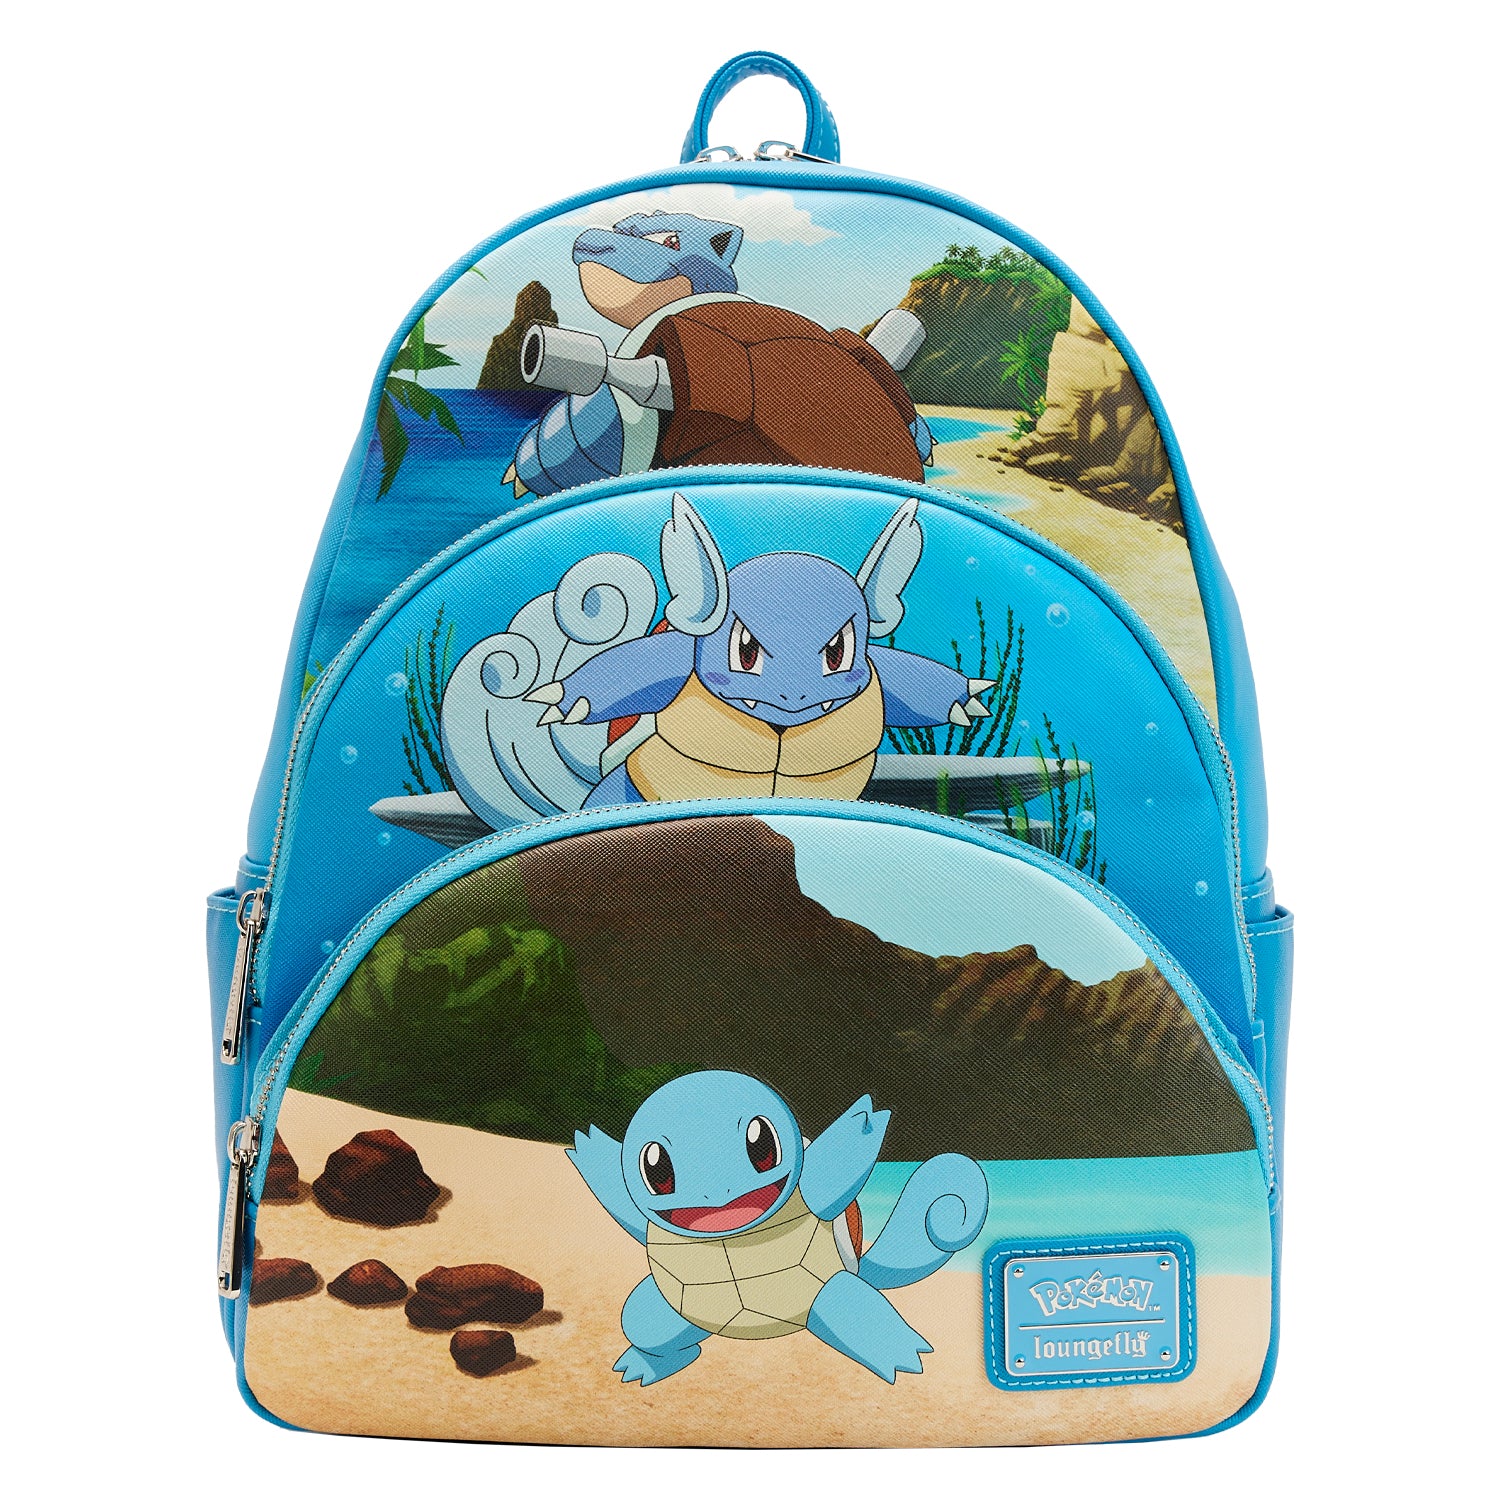 Coming Soon: Pop! Games — Pokémon and Loungefly Pokémon Bag!